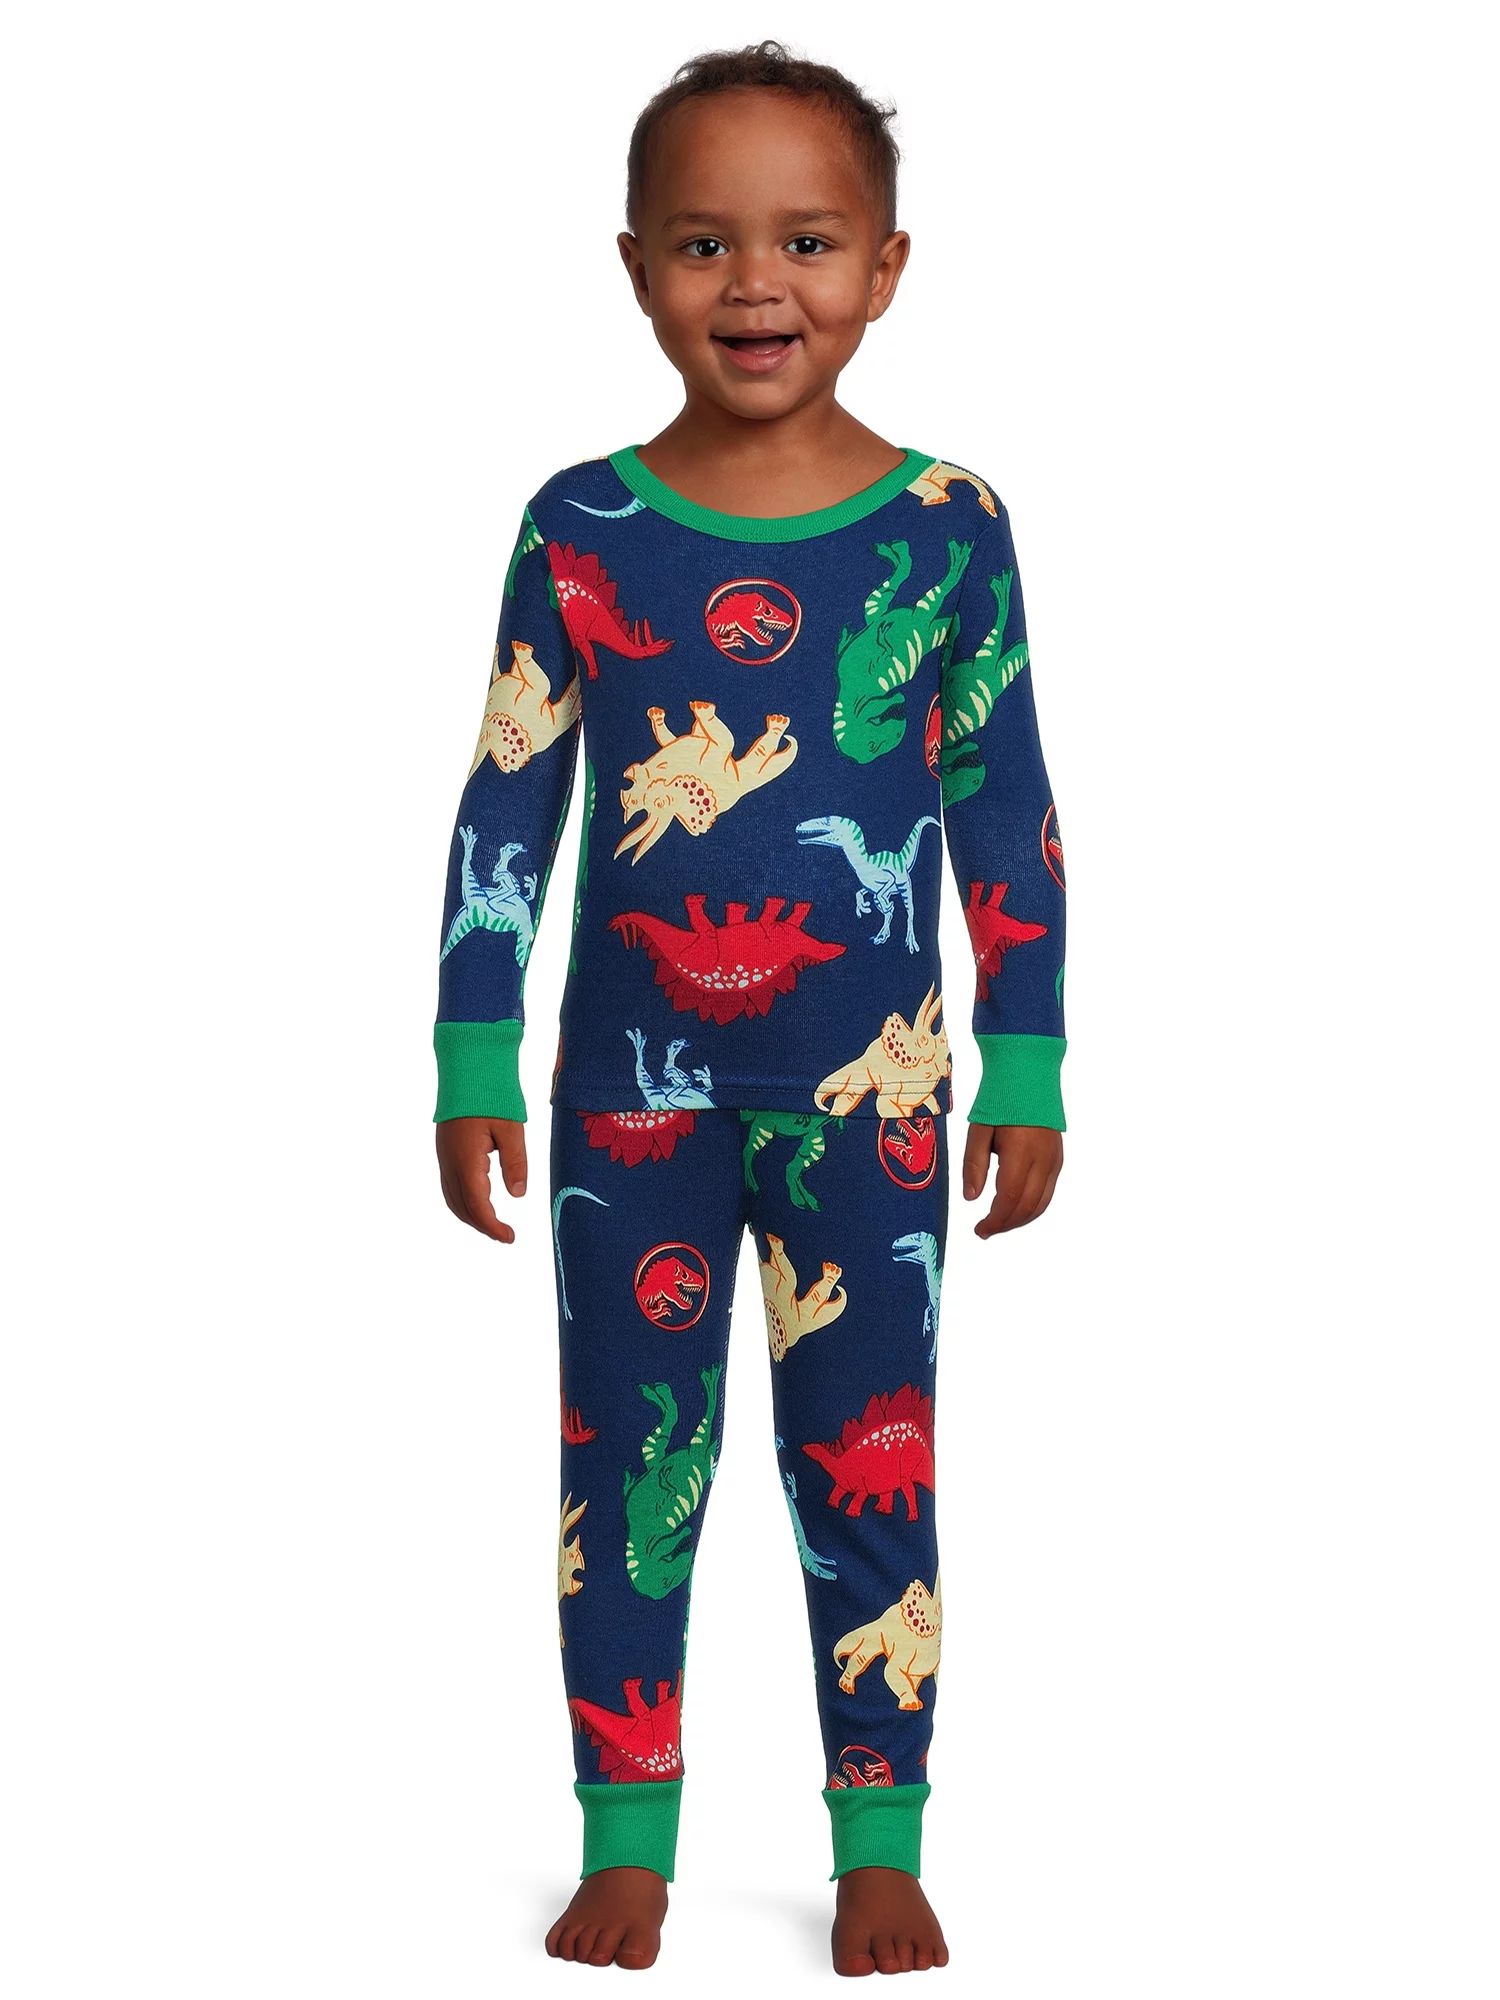 Jurassic World Toddler Boys Long Sleeve Top and Pants, 2-Piece Pajama Set, Sizes 12M-5T | Walmart (US)